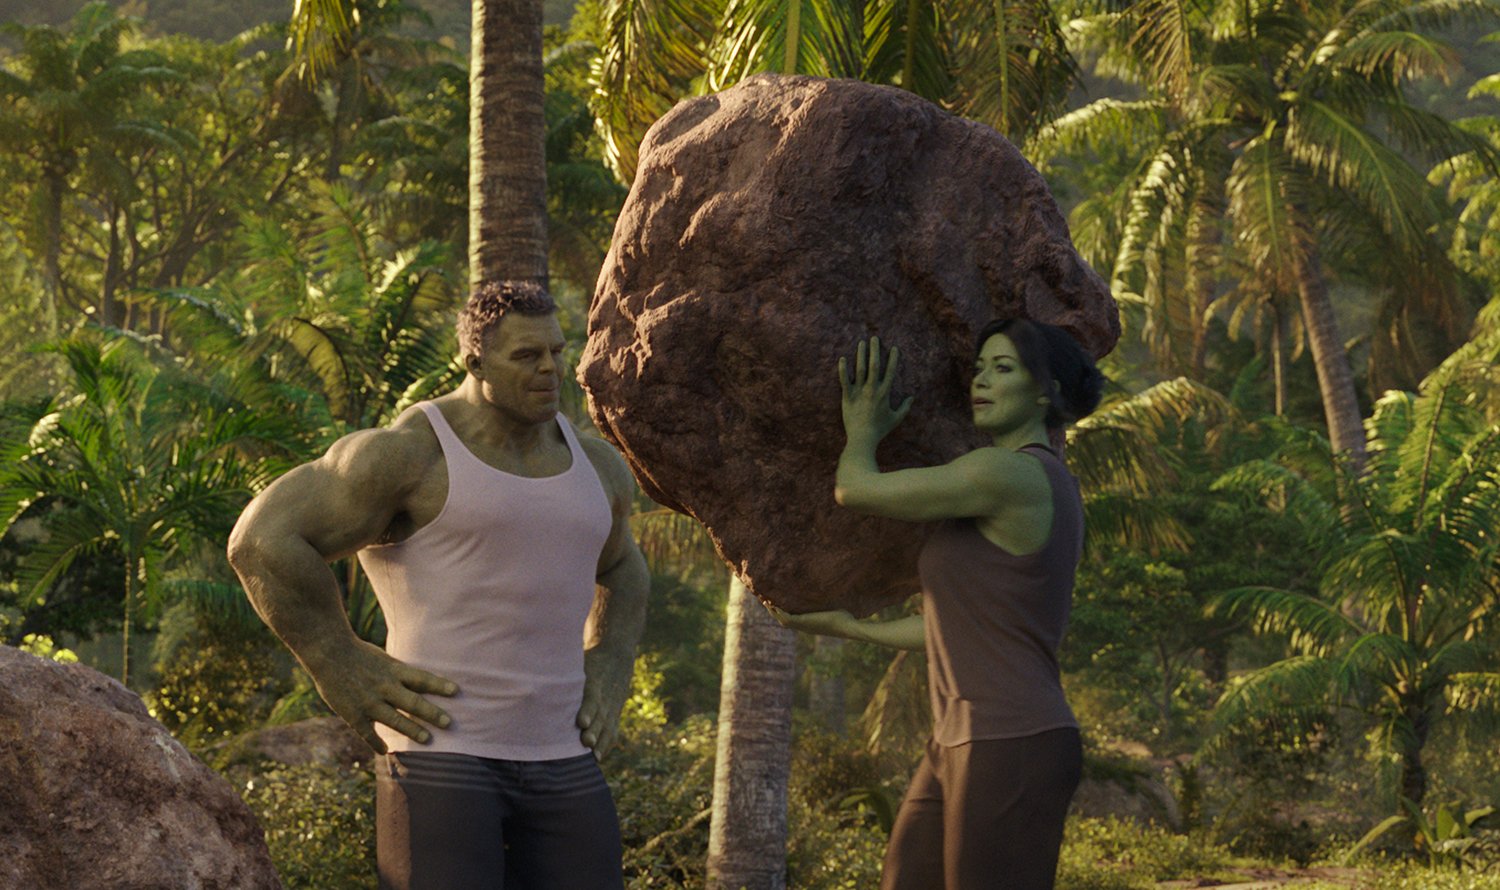 Mark Ruffalo as Hulk and Tatiana Maslany as She-Hulk in She-Hulk: Attorney at Law, which addressed Captain America's virginity